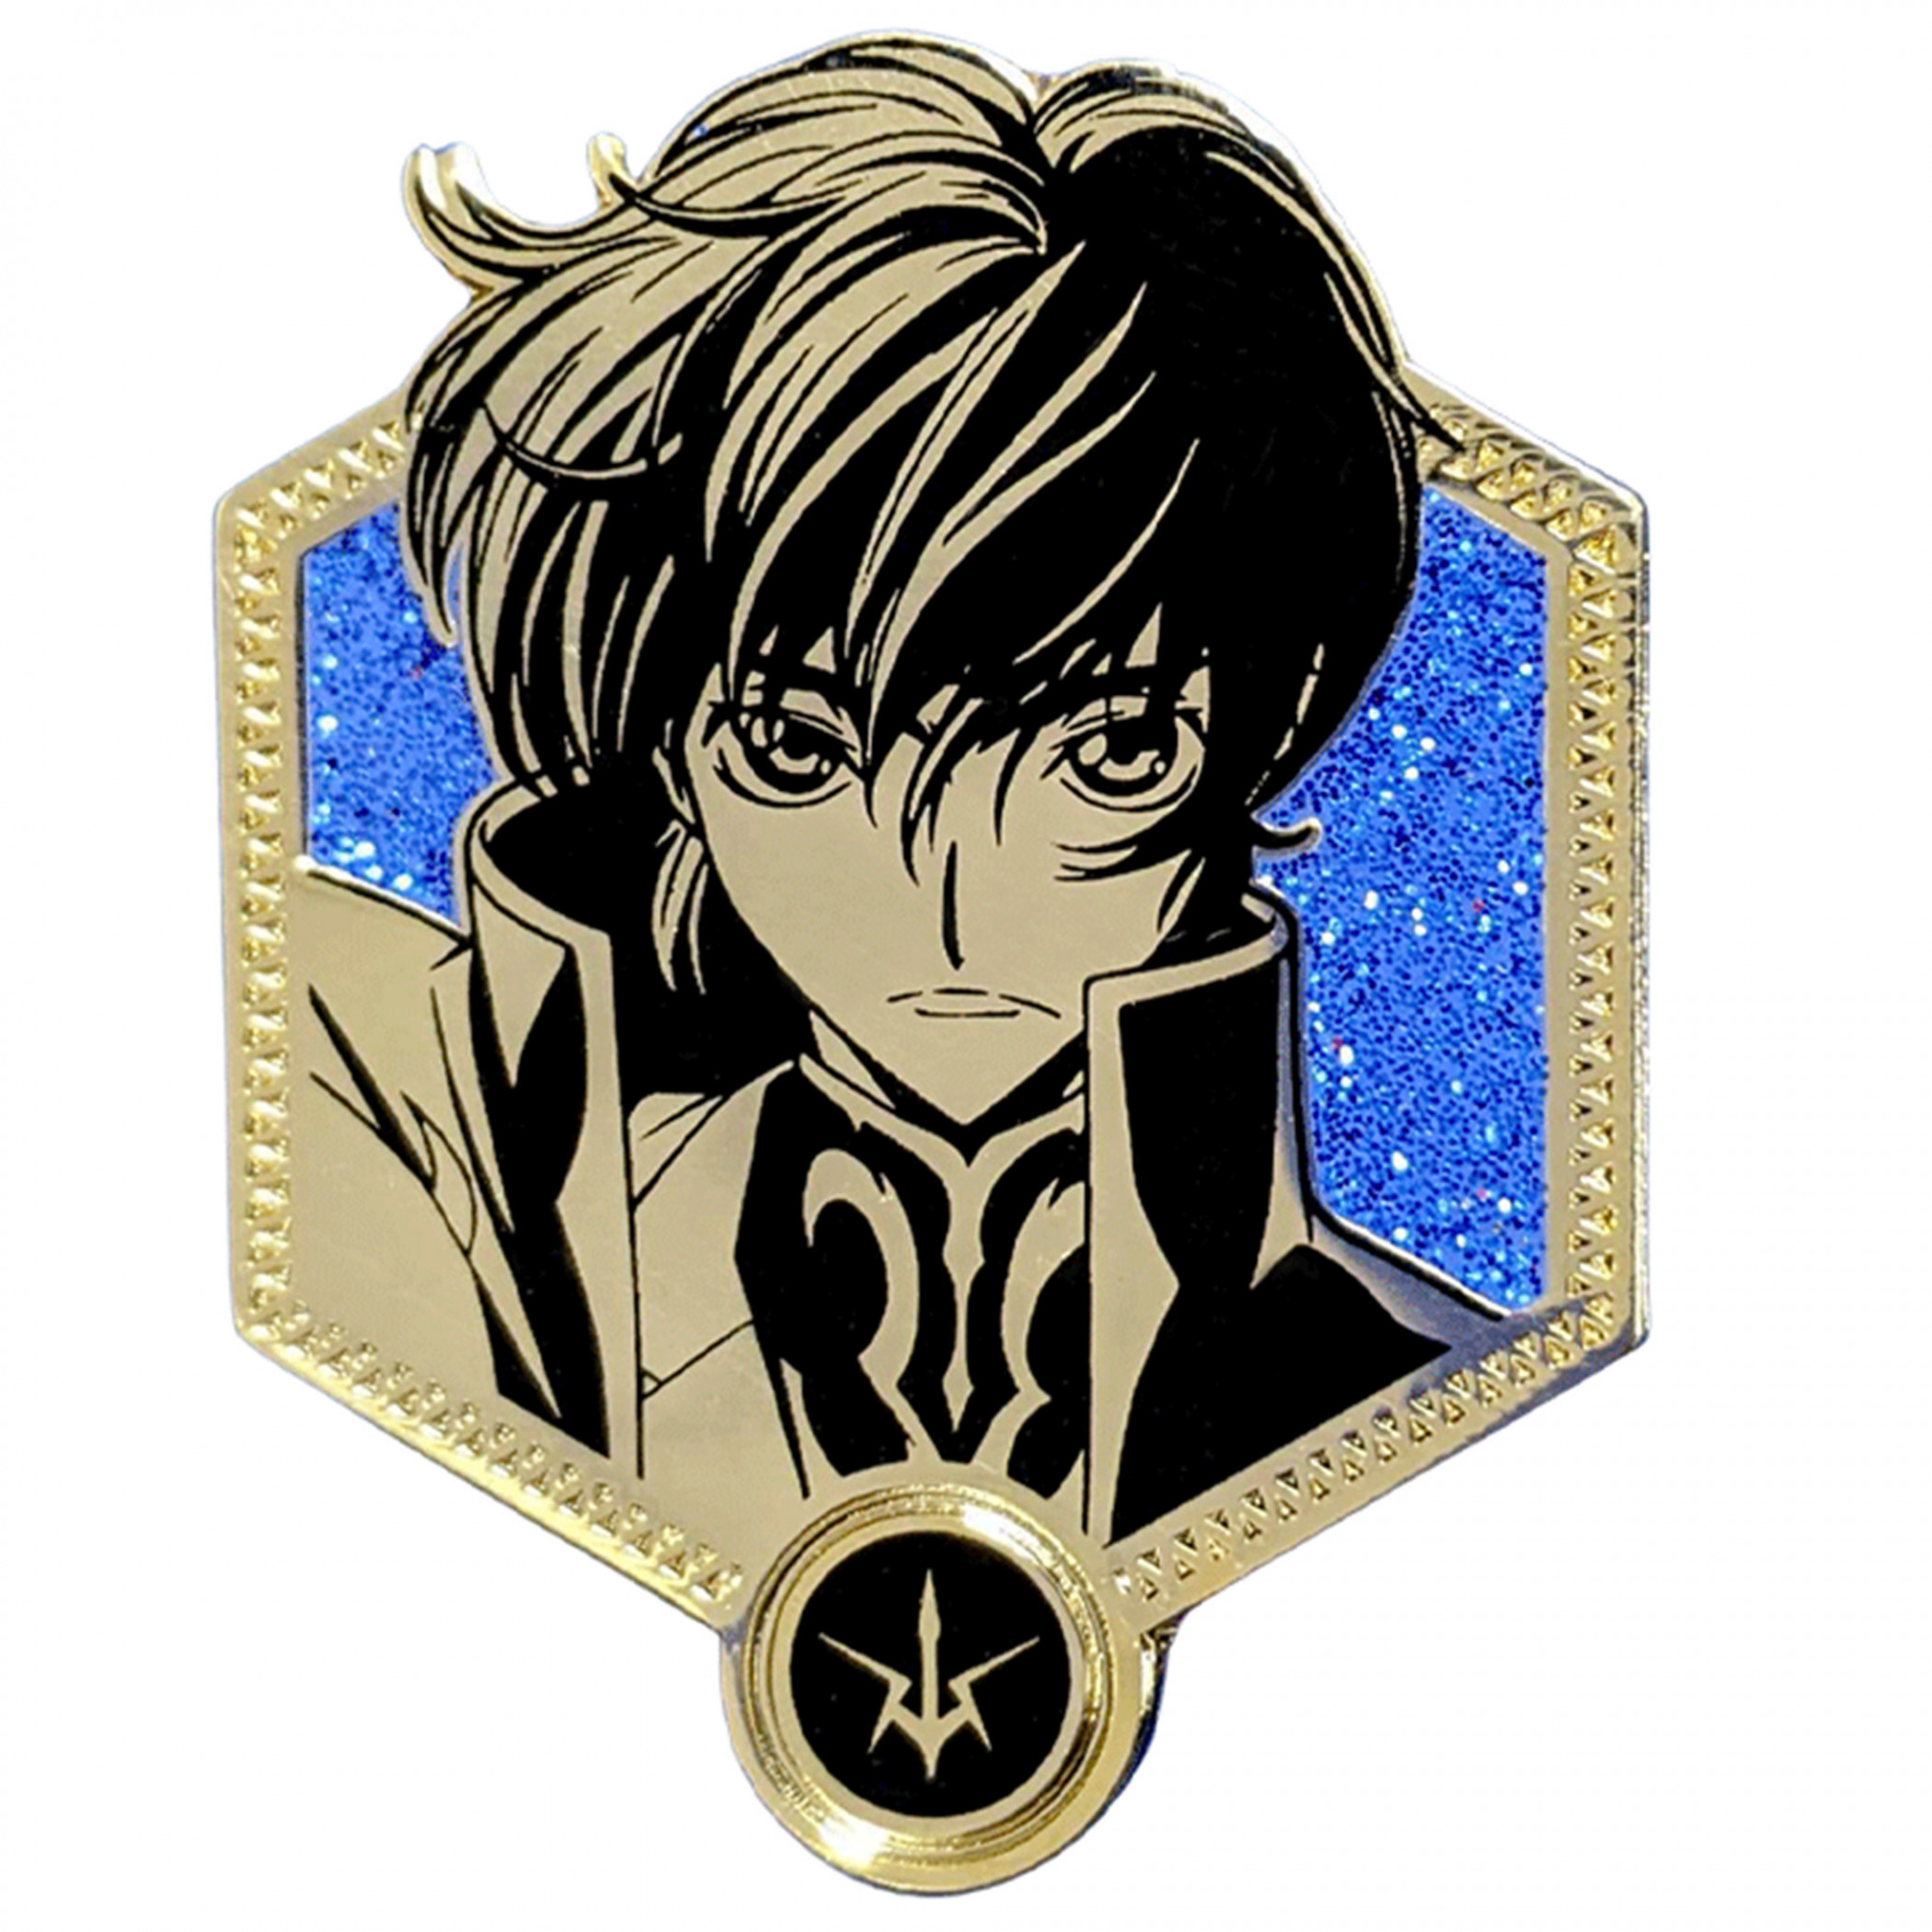 Code Geass Suzaku Kururugi Golden Series Limited Edition Enamel Pin